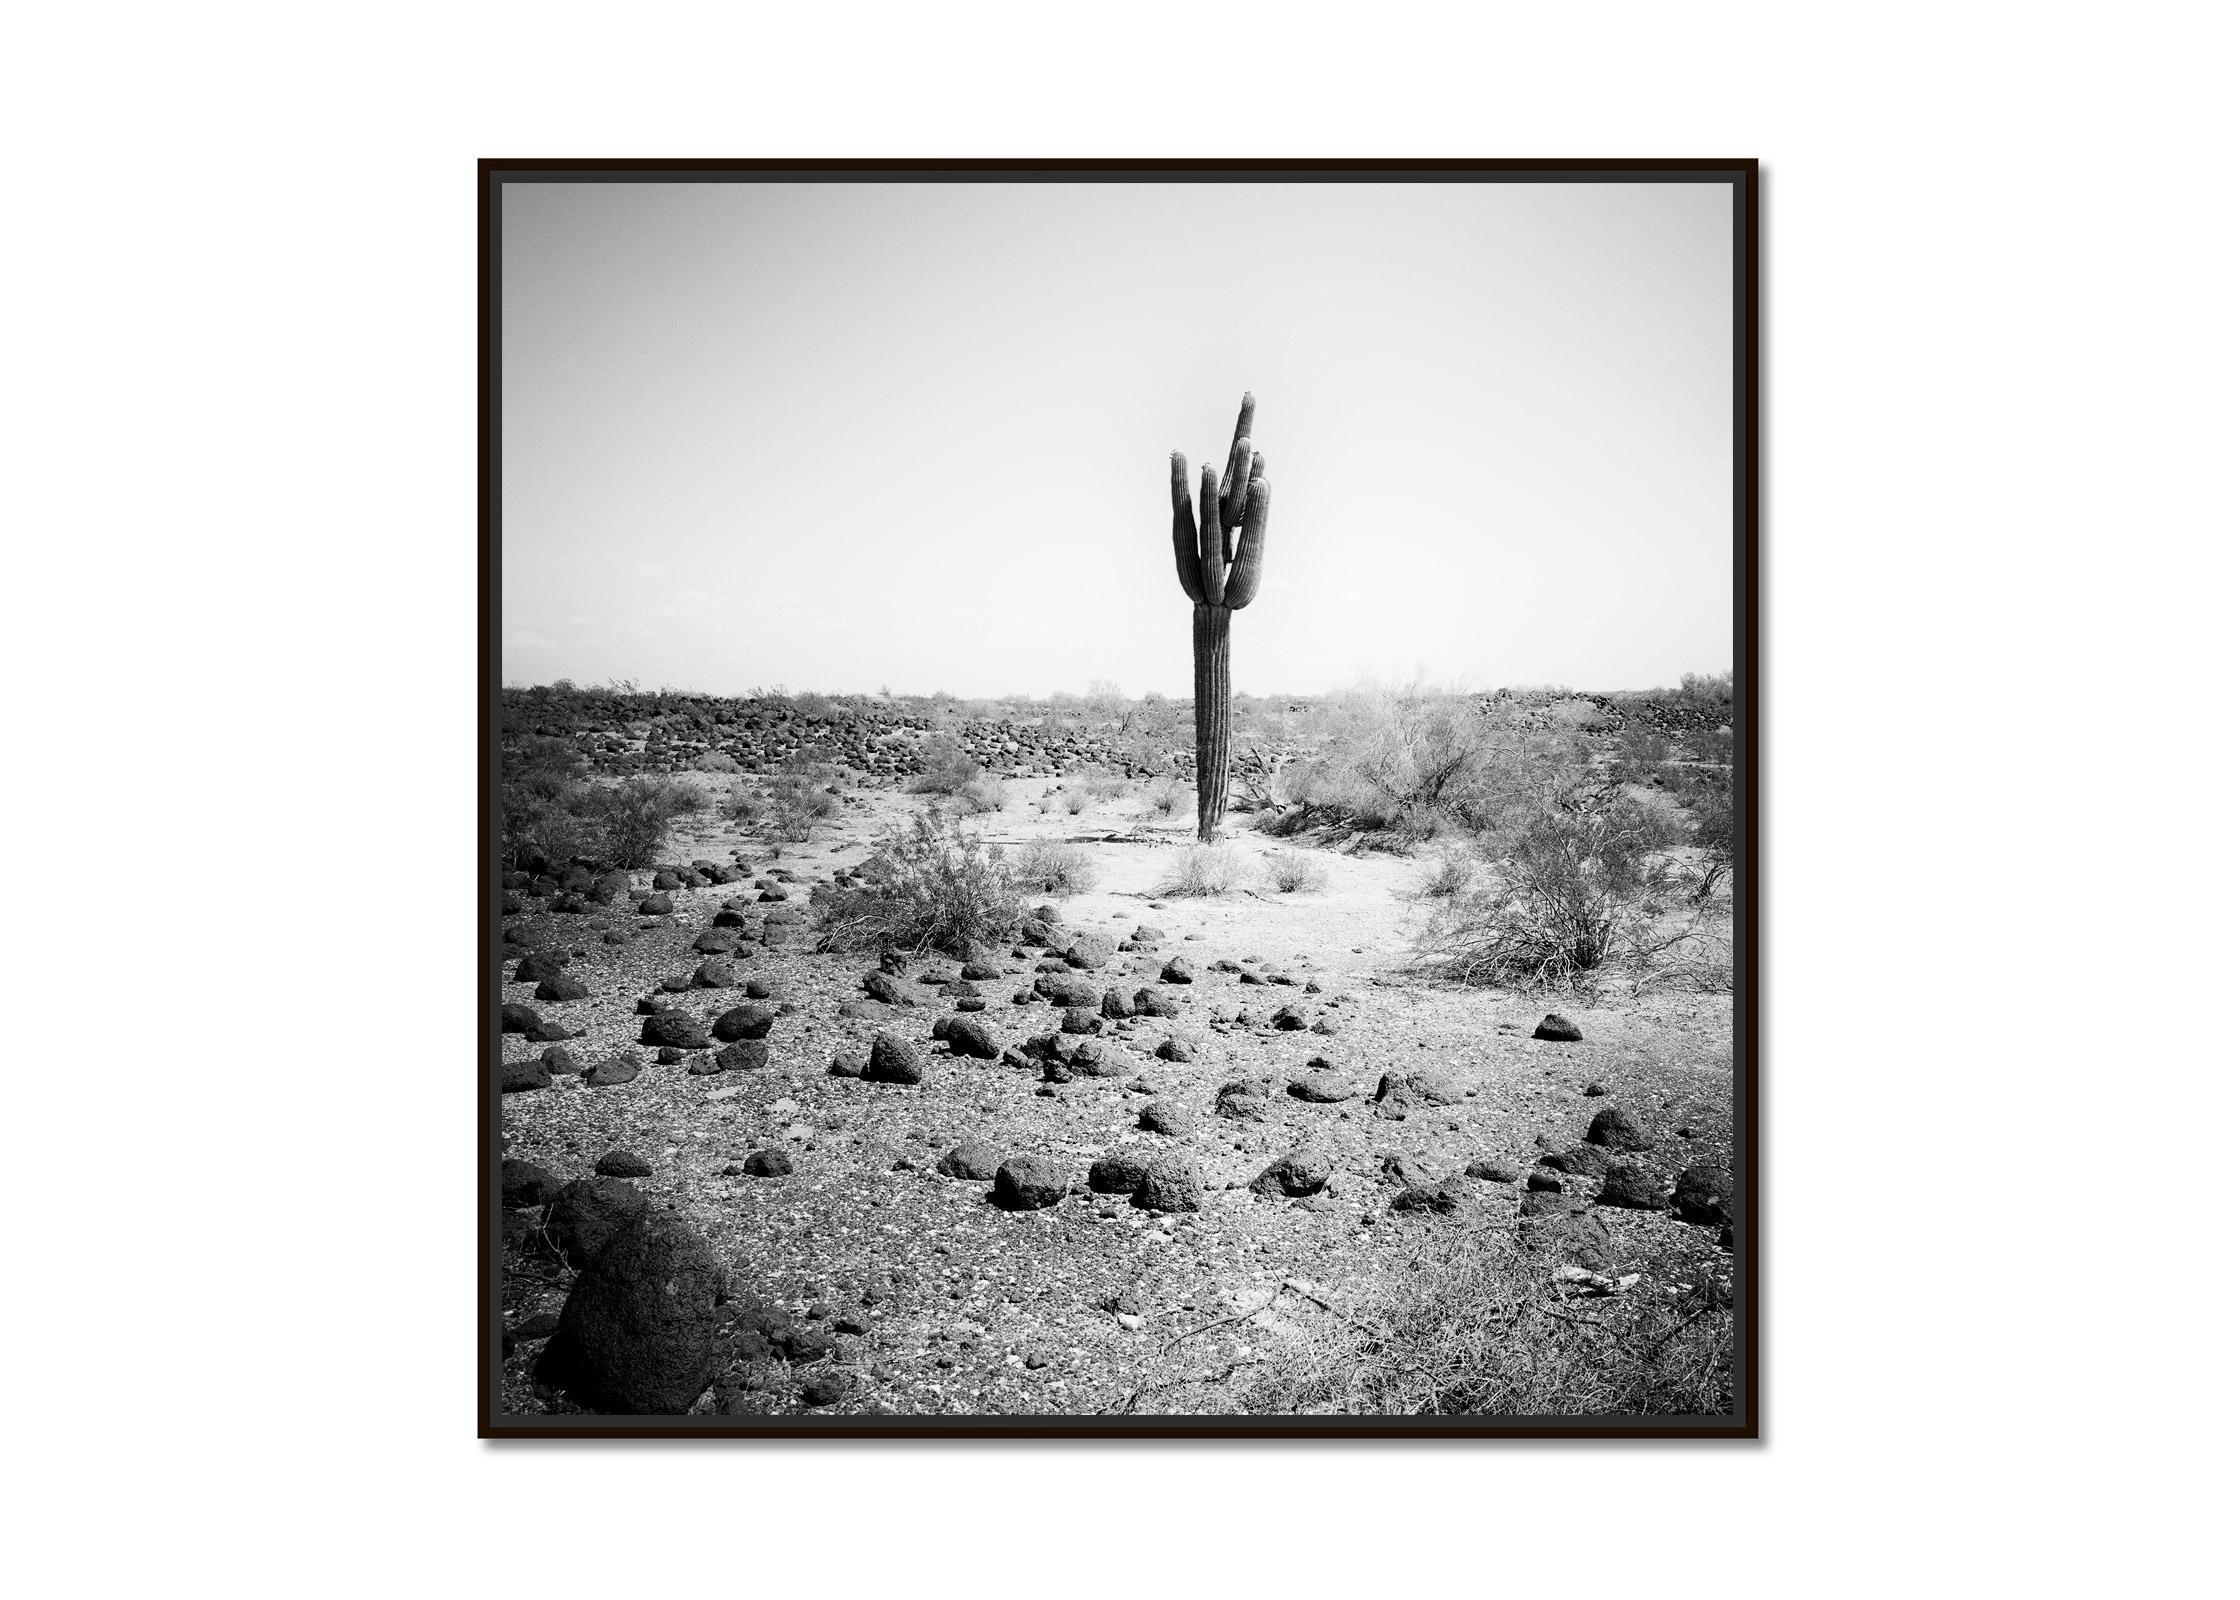 The last One Cactus Desert Arizona USA black & white landscape art photography - Photograph by Gerald Berghammer